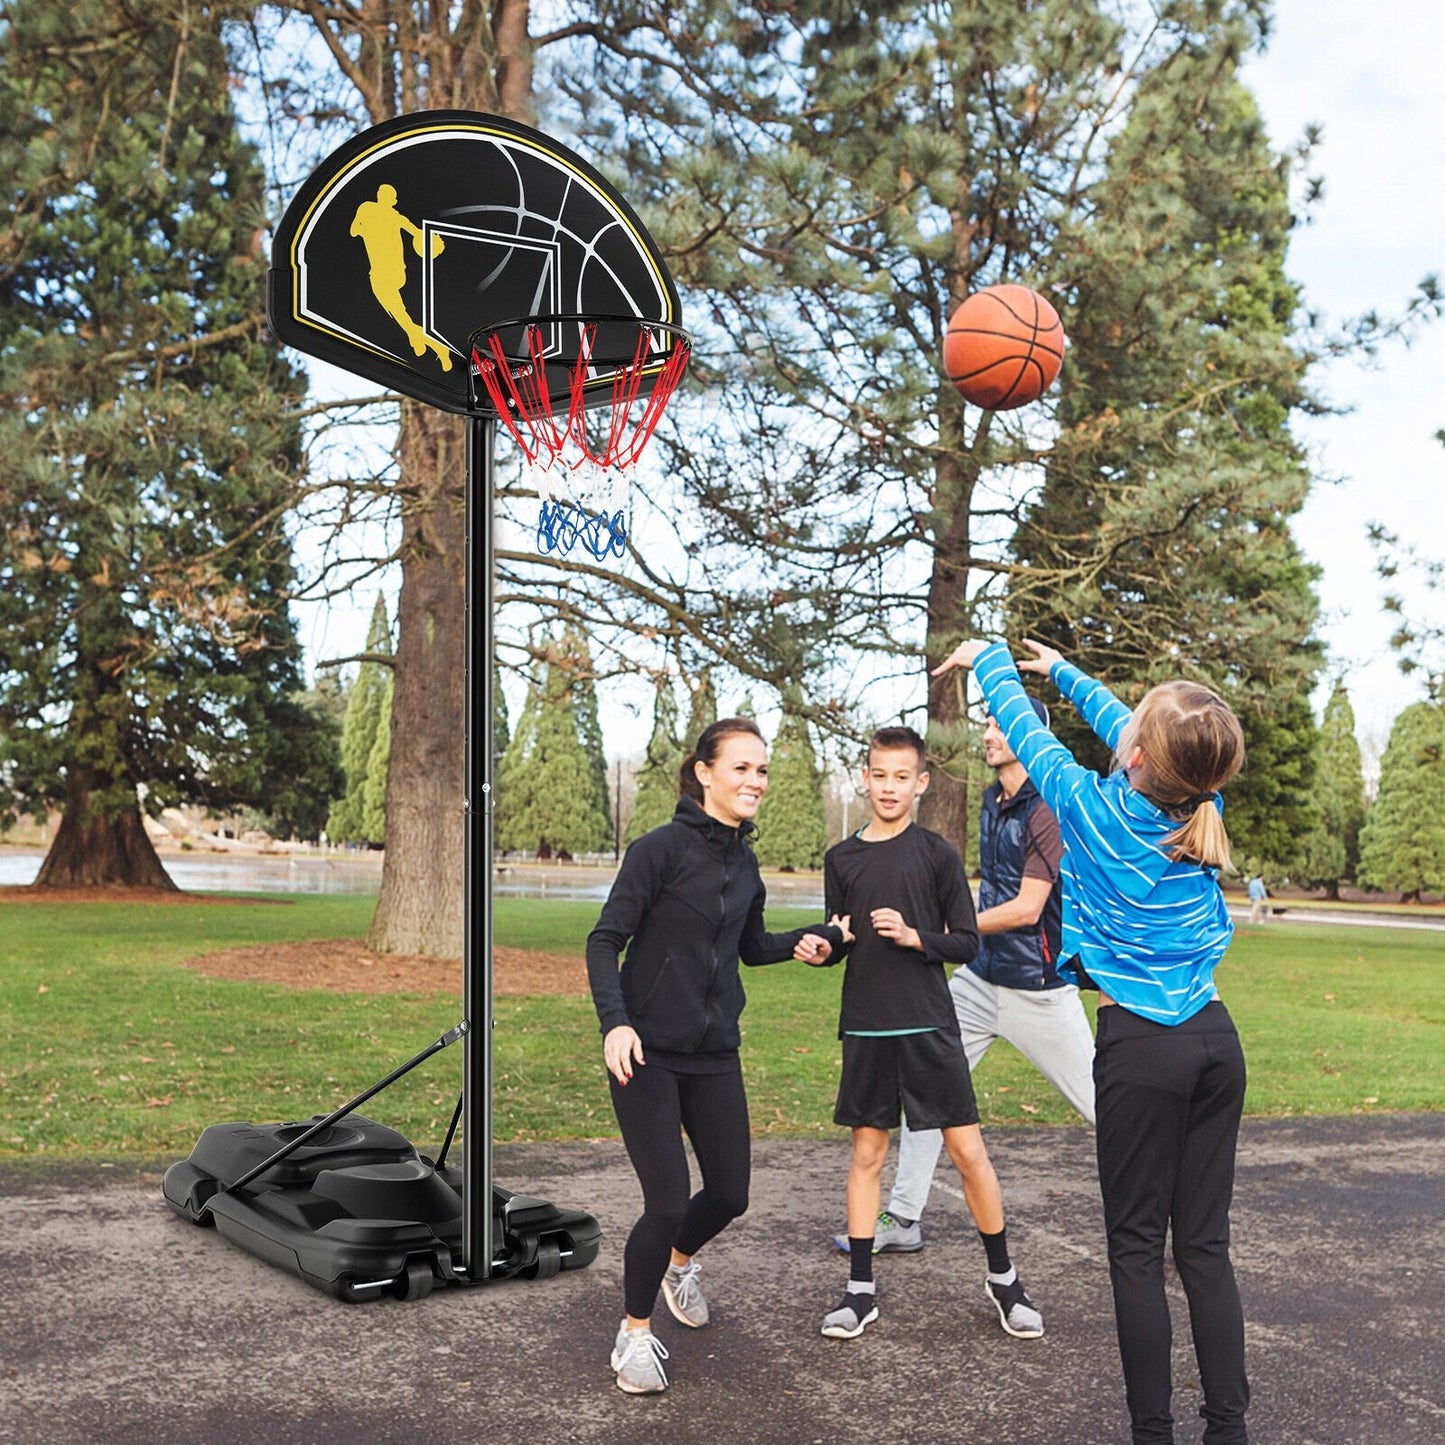 4.25-10 Feet Portable Adjustable Basketball Goal Hoop System, Black